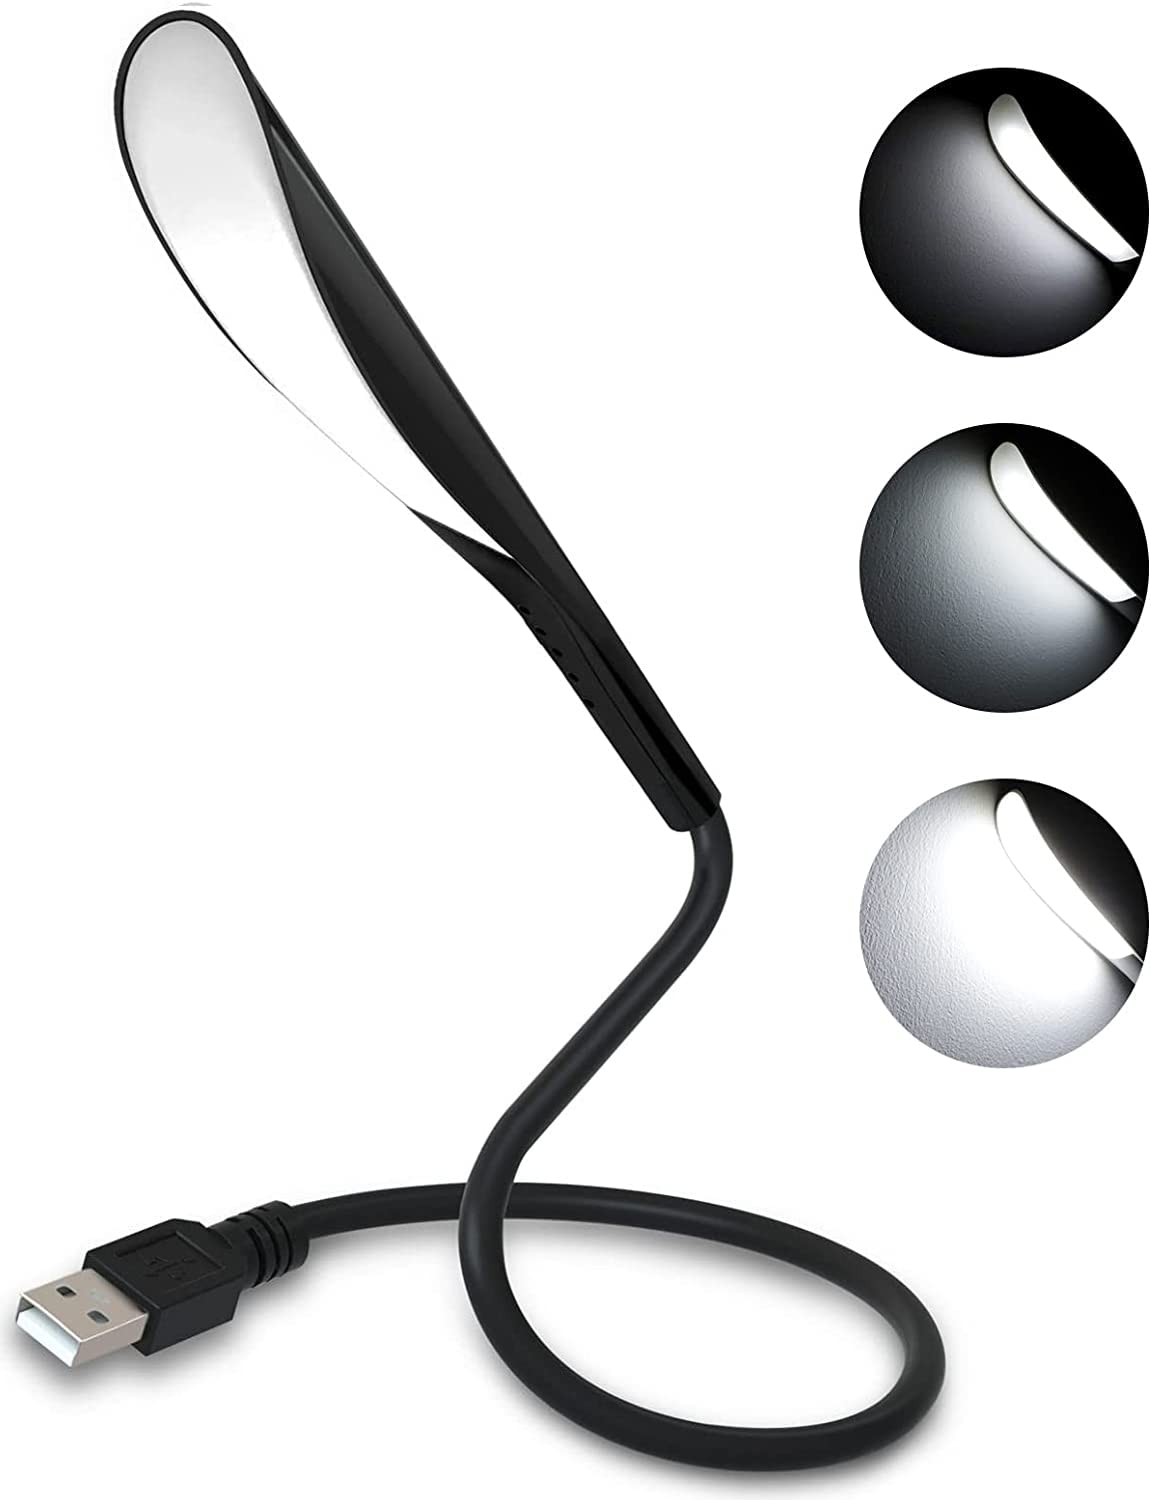 LEDBOKLI USBライト led読書ライト DC5V 2.8W 14LED個ビーズ 3段階調光 タッチスイッチ 手元ライト 明るい USBランプ フレキシブルタイプ 軽量 ブラック車用 イルミネーション